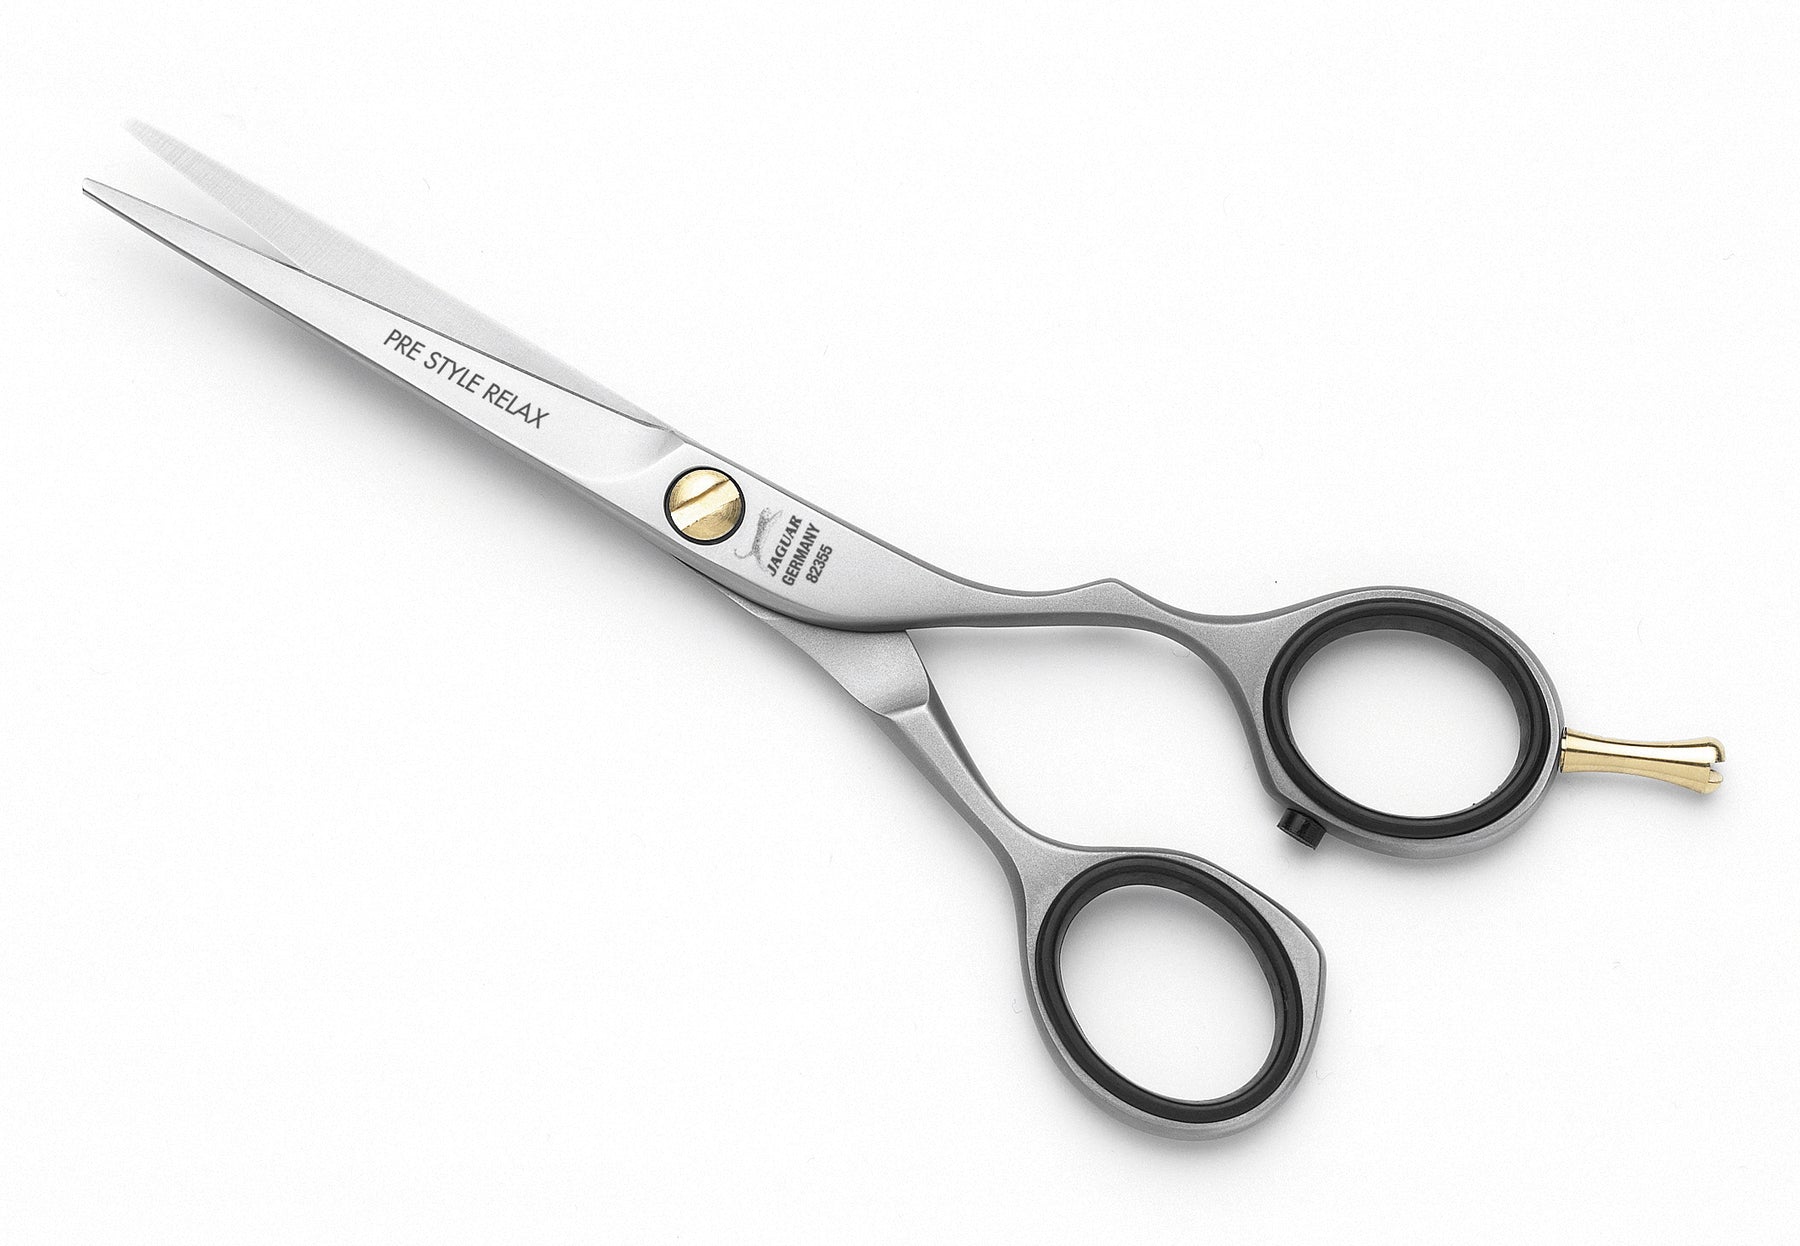 Jaguar German 6.0 Relax 6.0 in. Stainless Offset Barbershop & Salon Shears  Steel Cutting Scissors